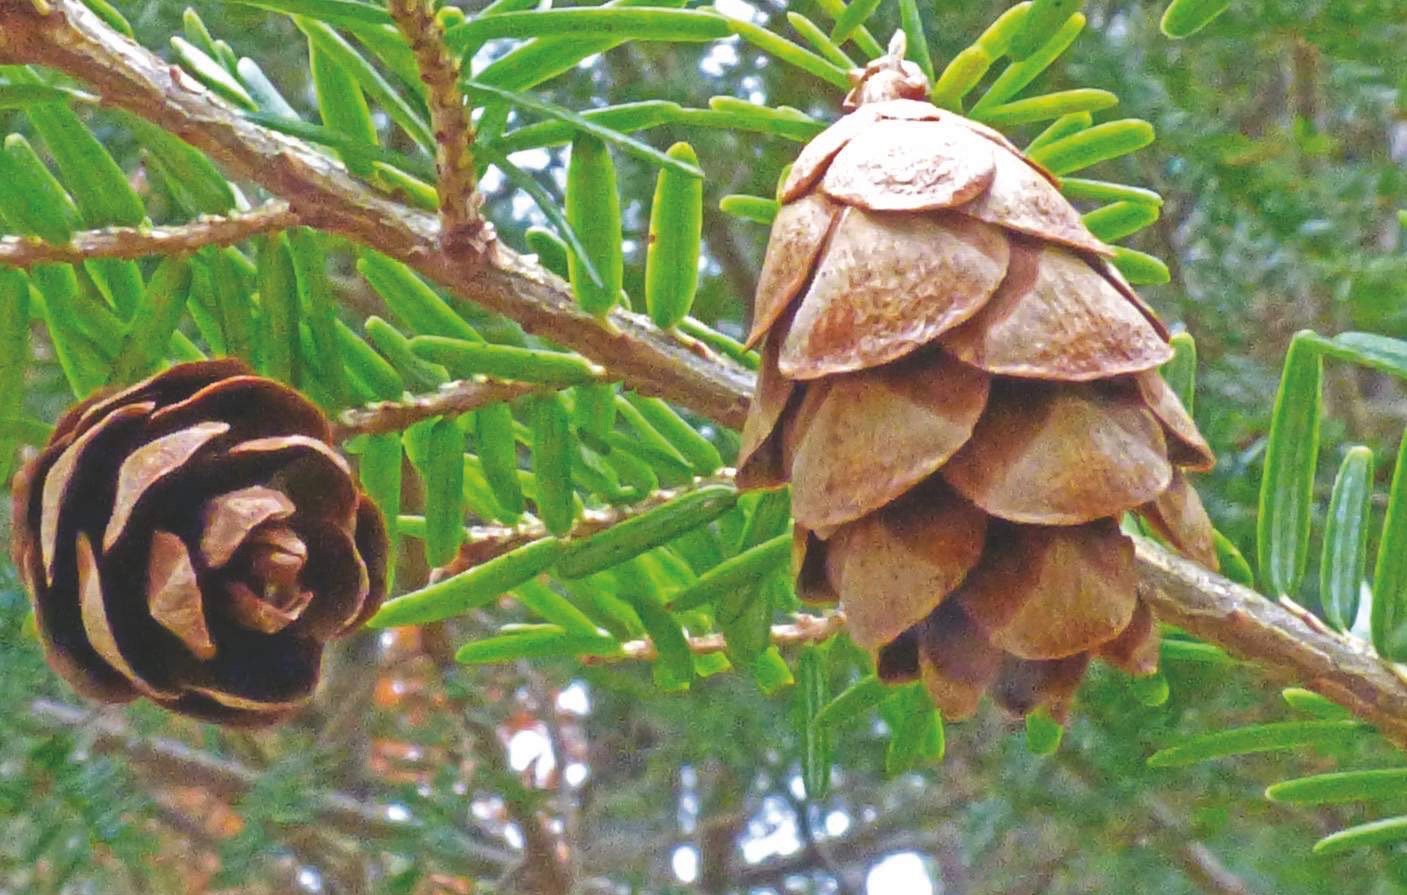 types of pine cones